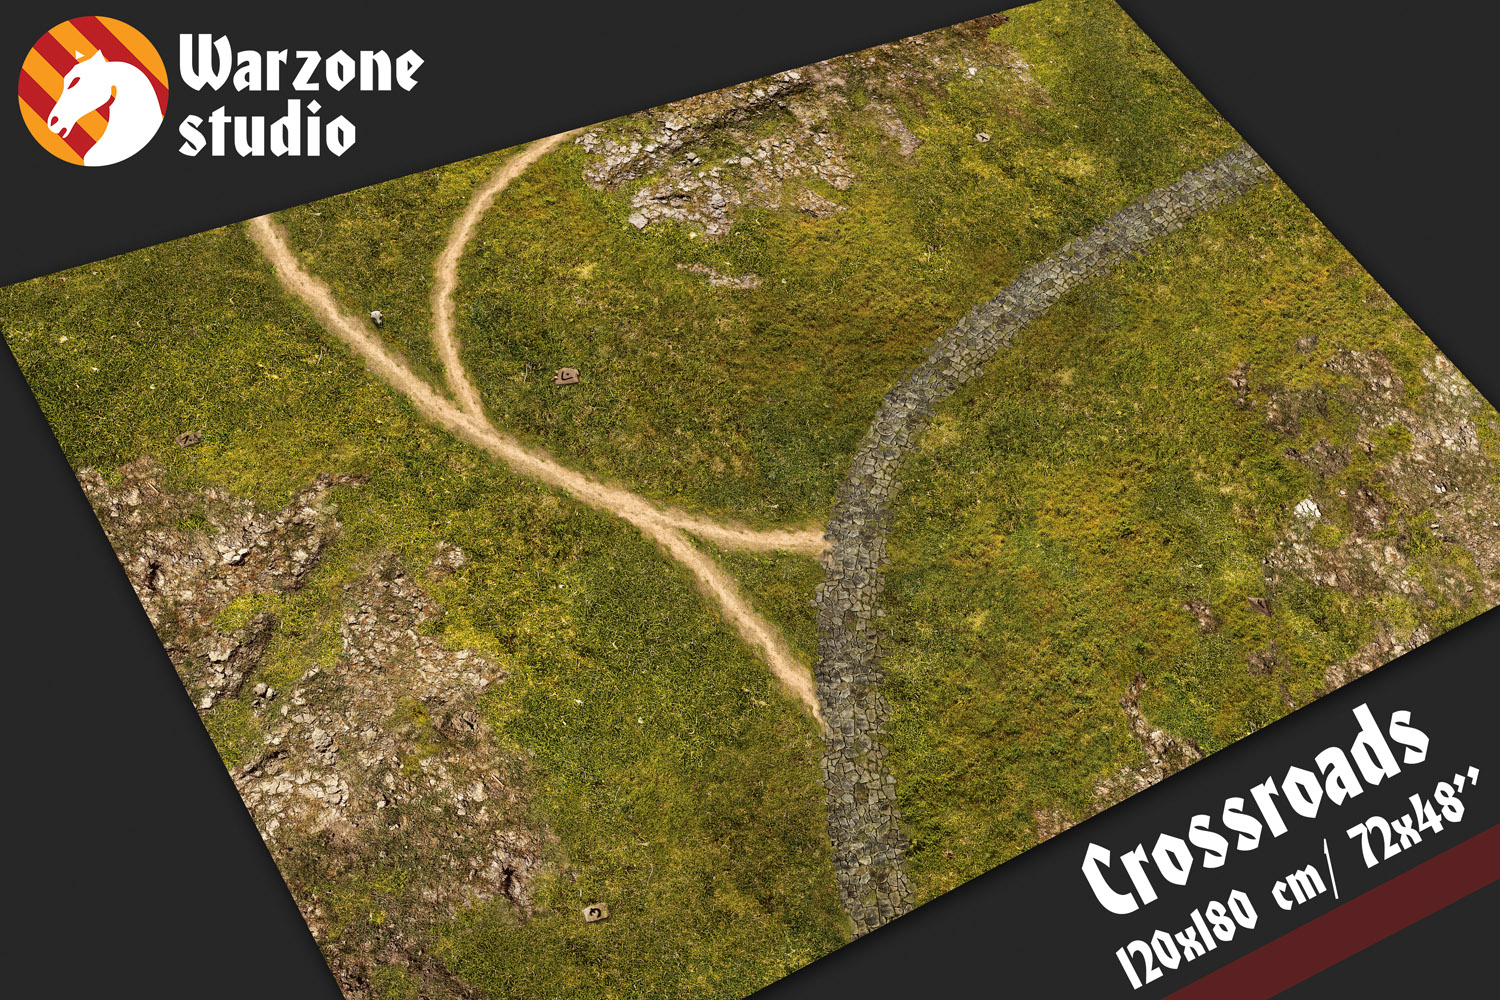 Gaming mat “Crossroads” by Warzone Studio